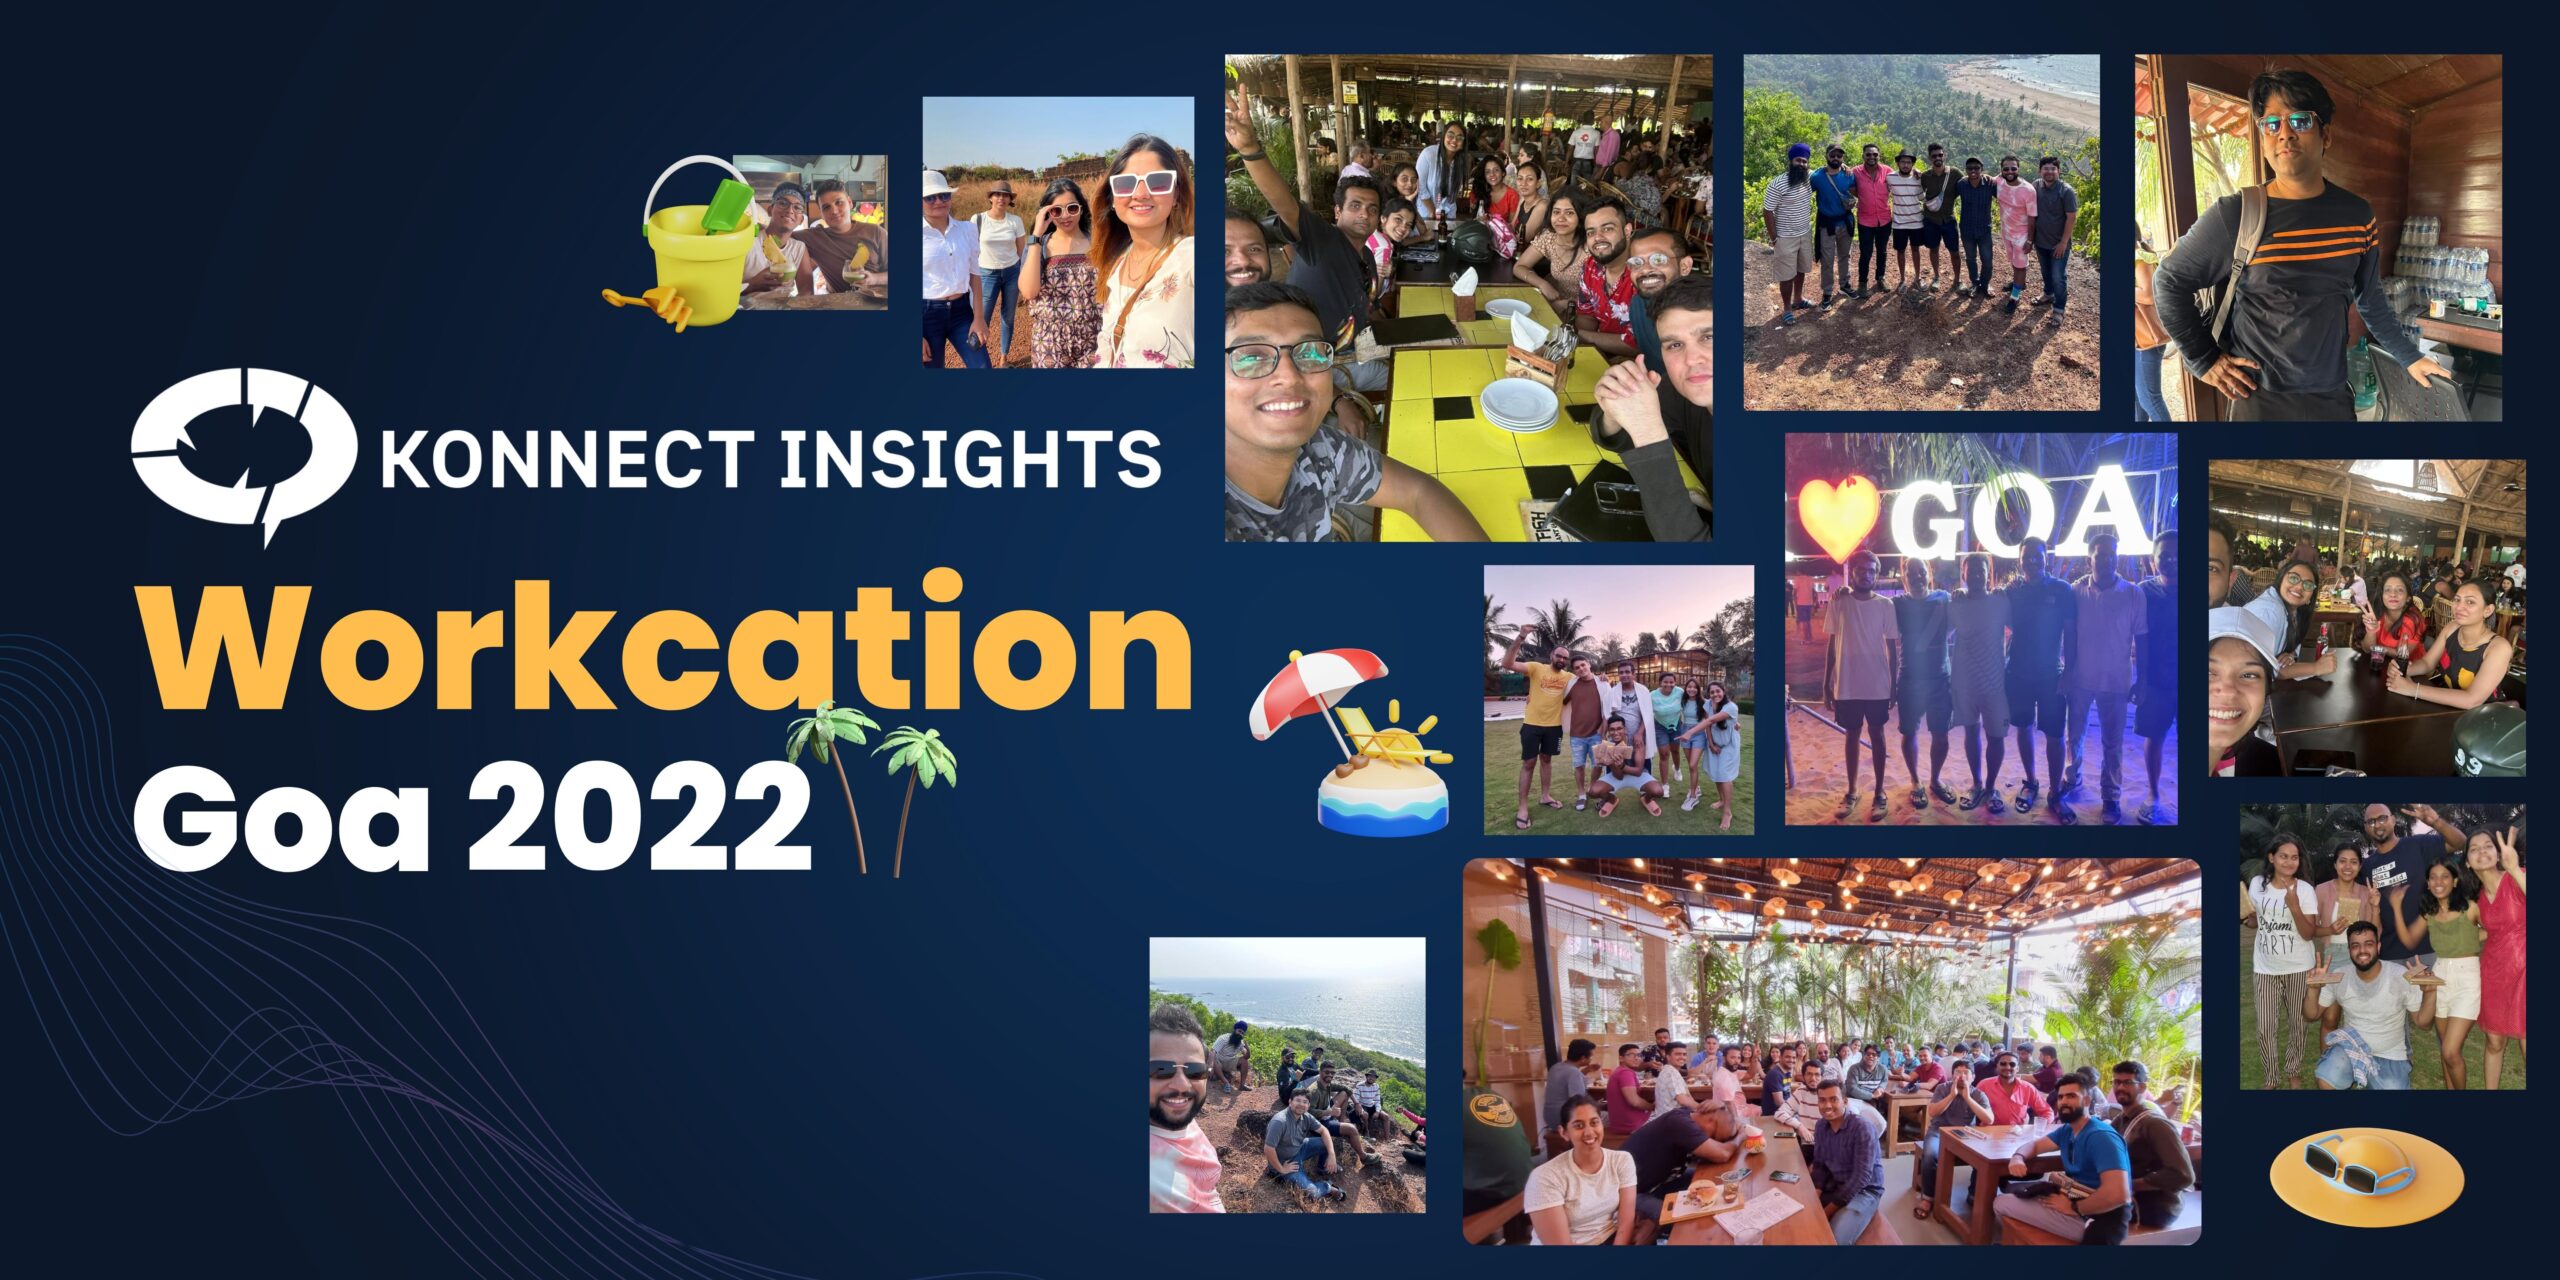 Konnect Insights Workcation - Goa 2022